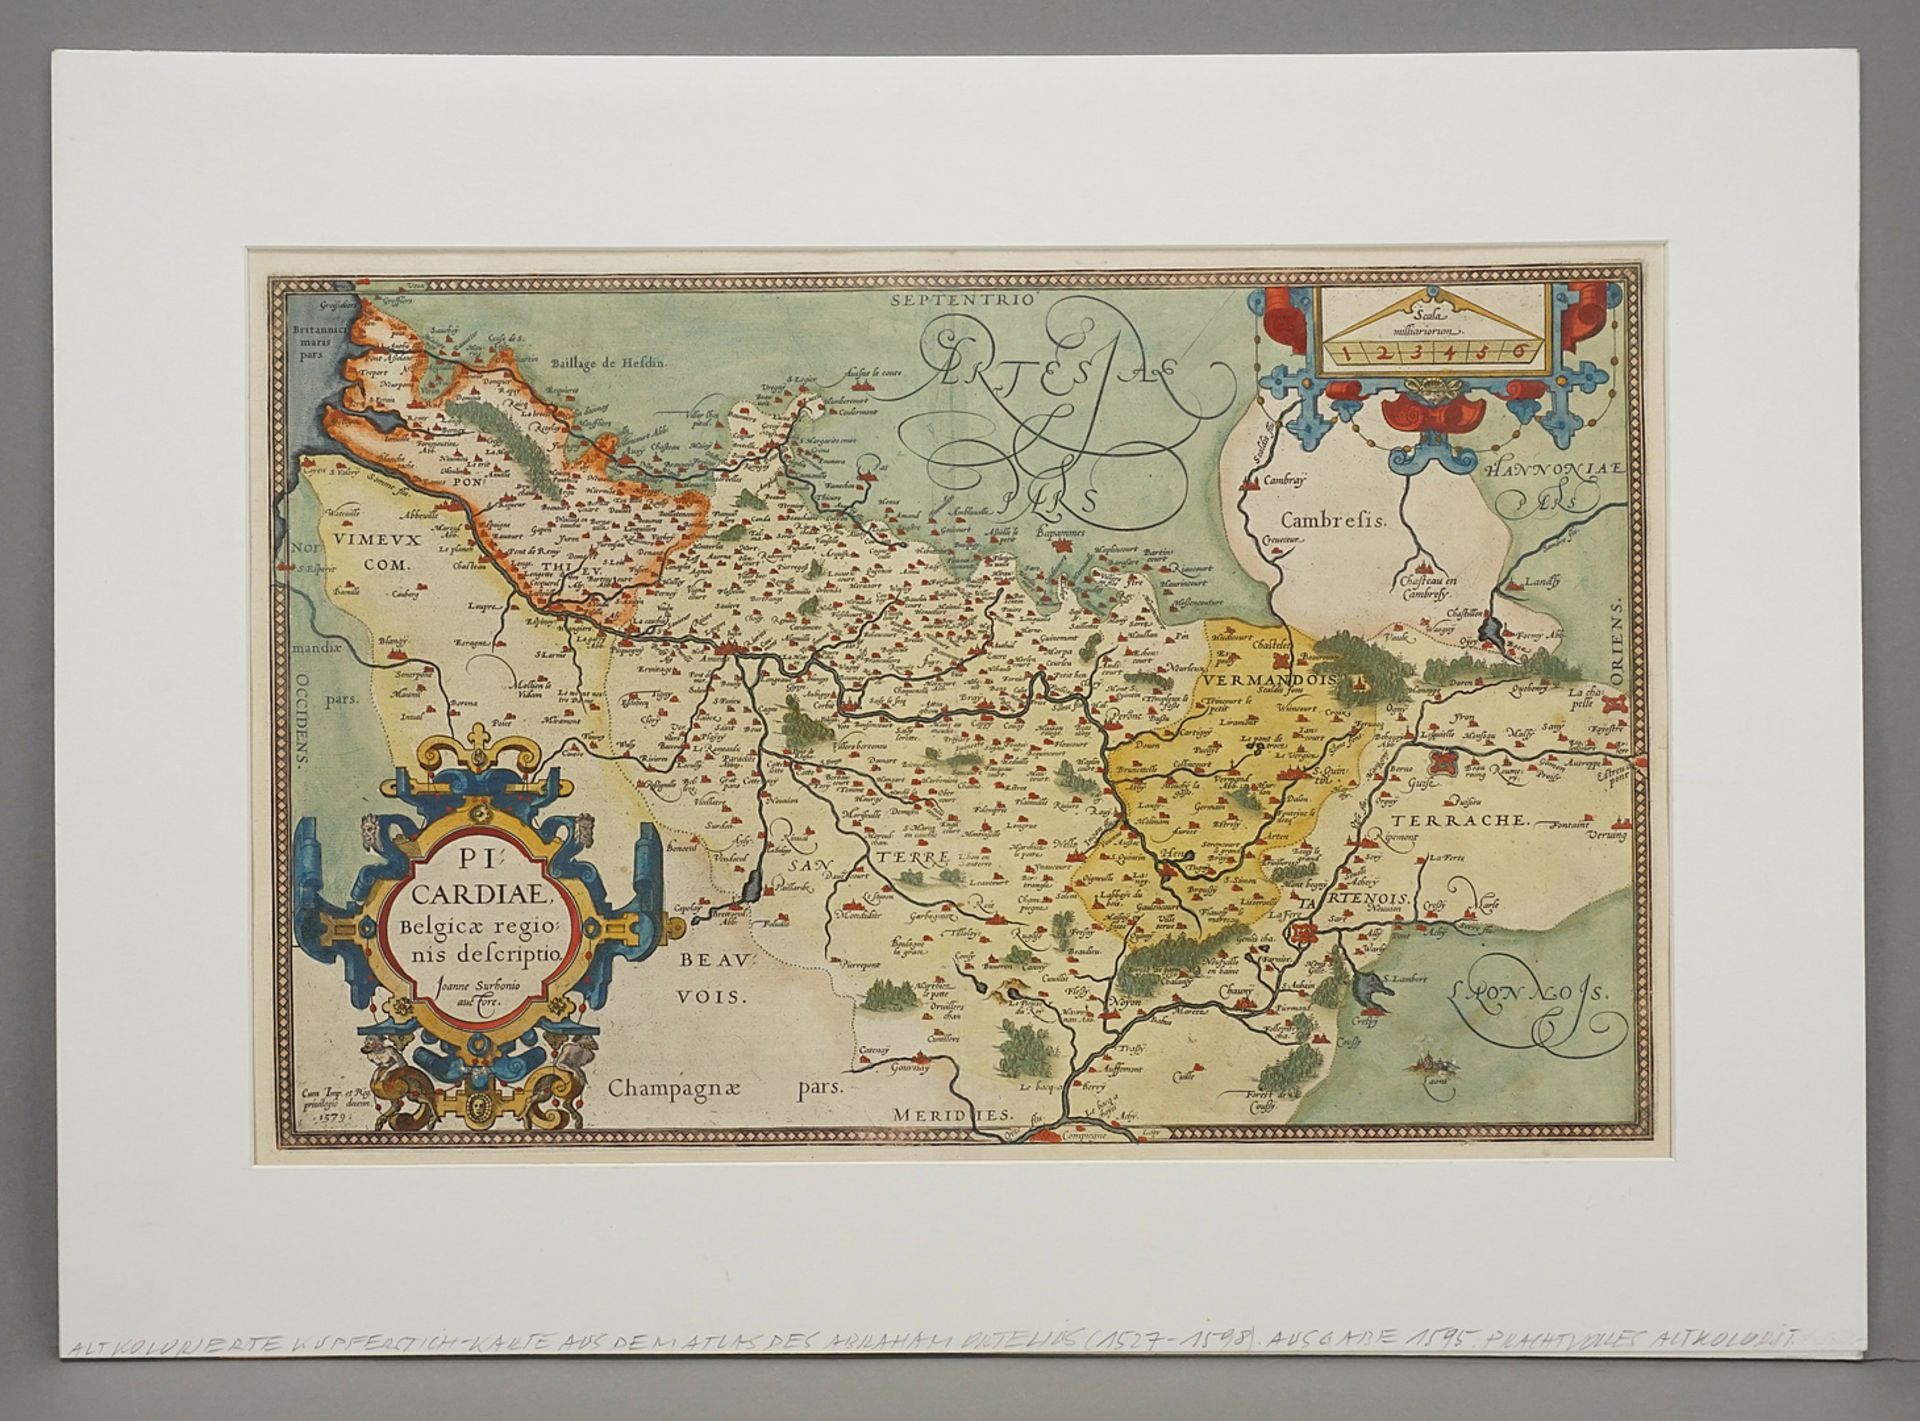 According to Johann Surhon, "Picardiae, Belgicae regionis descriptio" (Map of Picardy) - Image 2 of 4